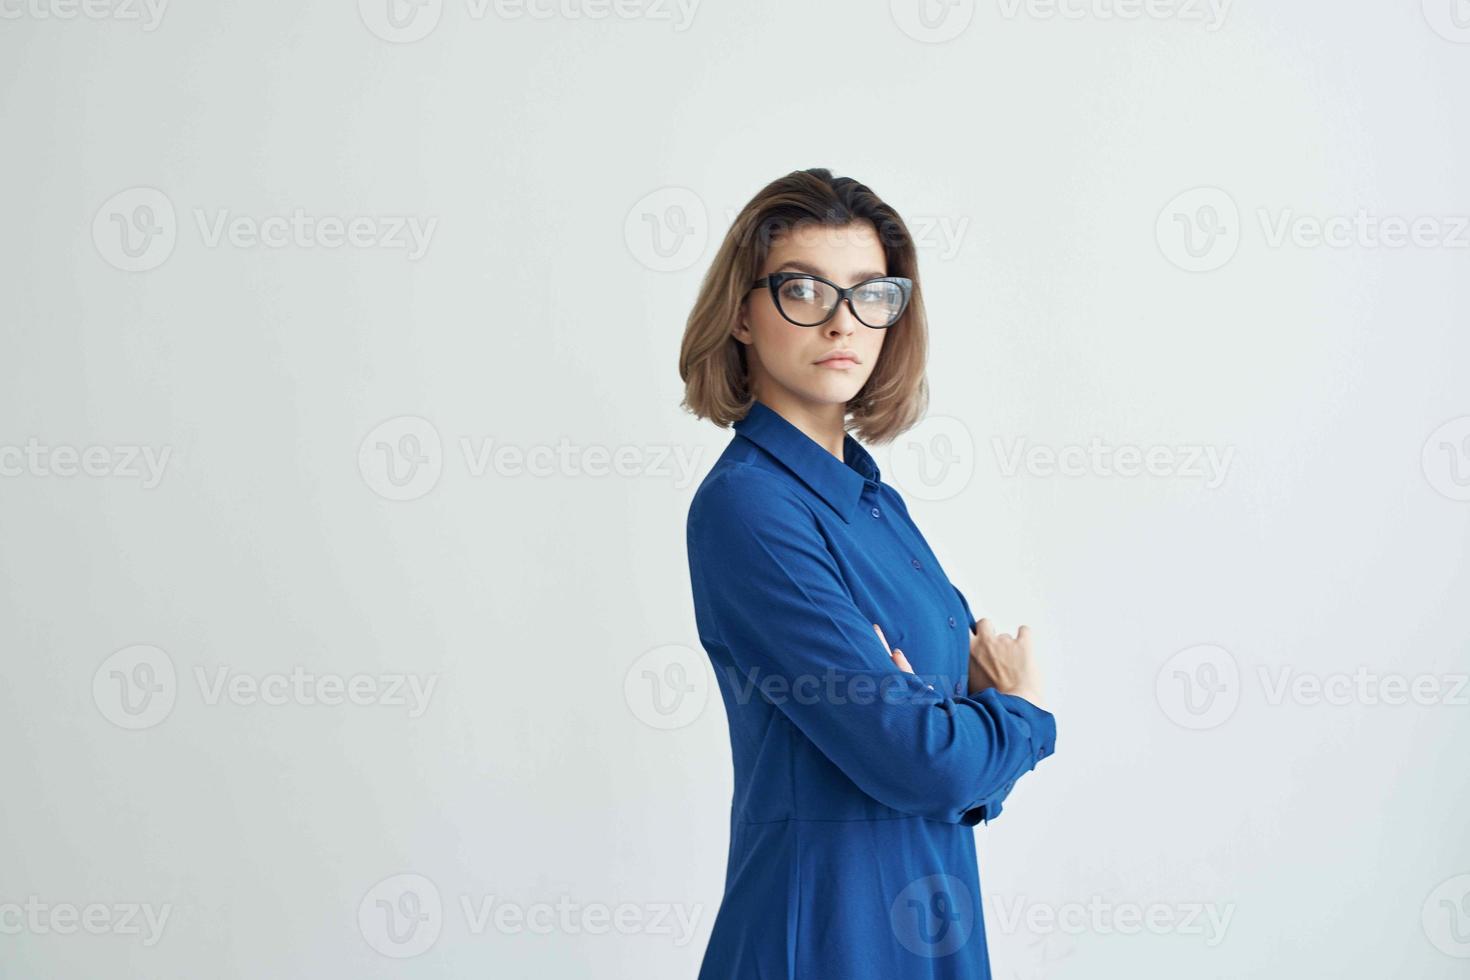 vrouw in blauw overhemd vervelend bril mode elegant poseren stijl foto